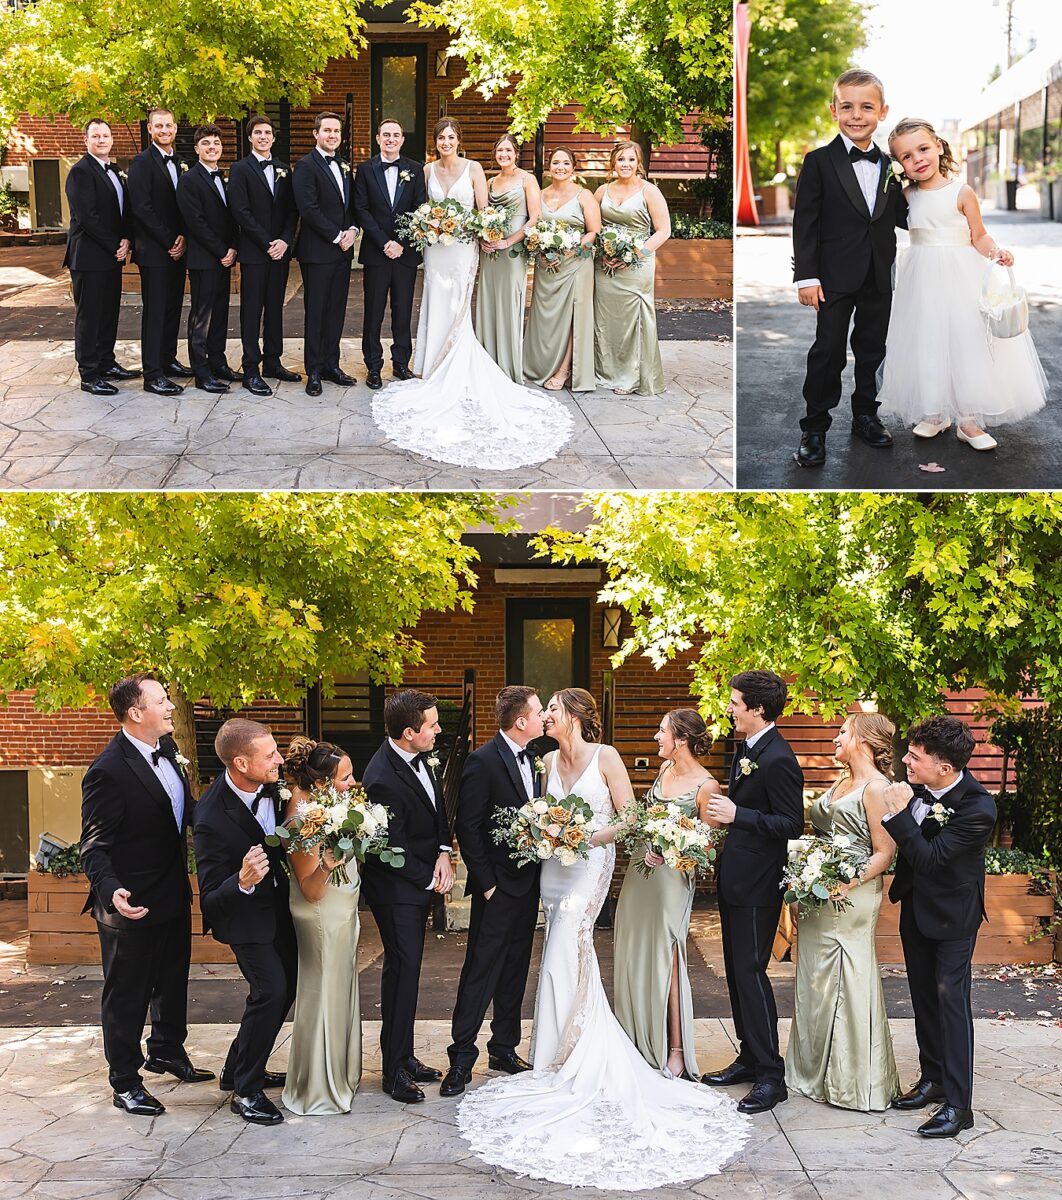 Mavris Event Center Wedding | Indianapolis Wedding Photographers | casey and her camera